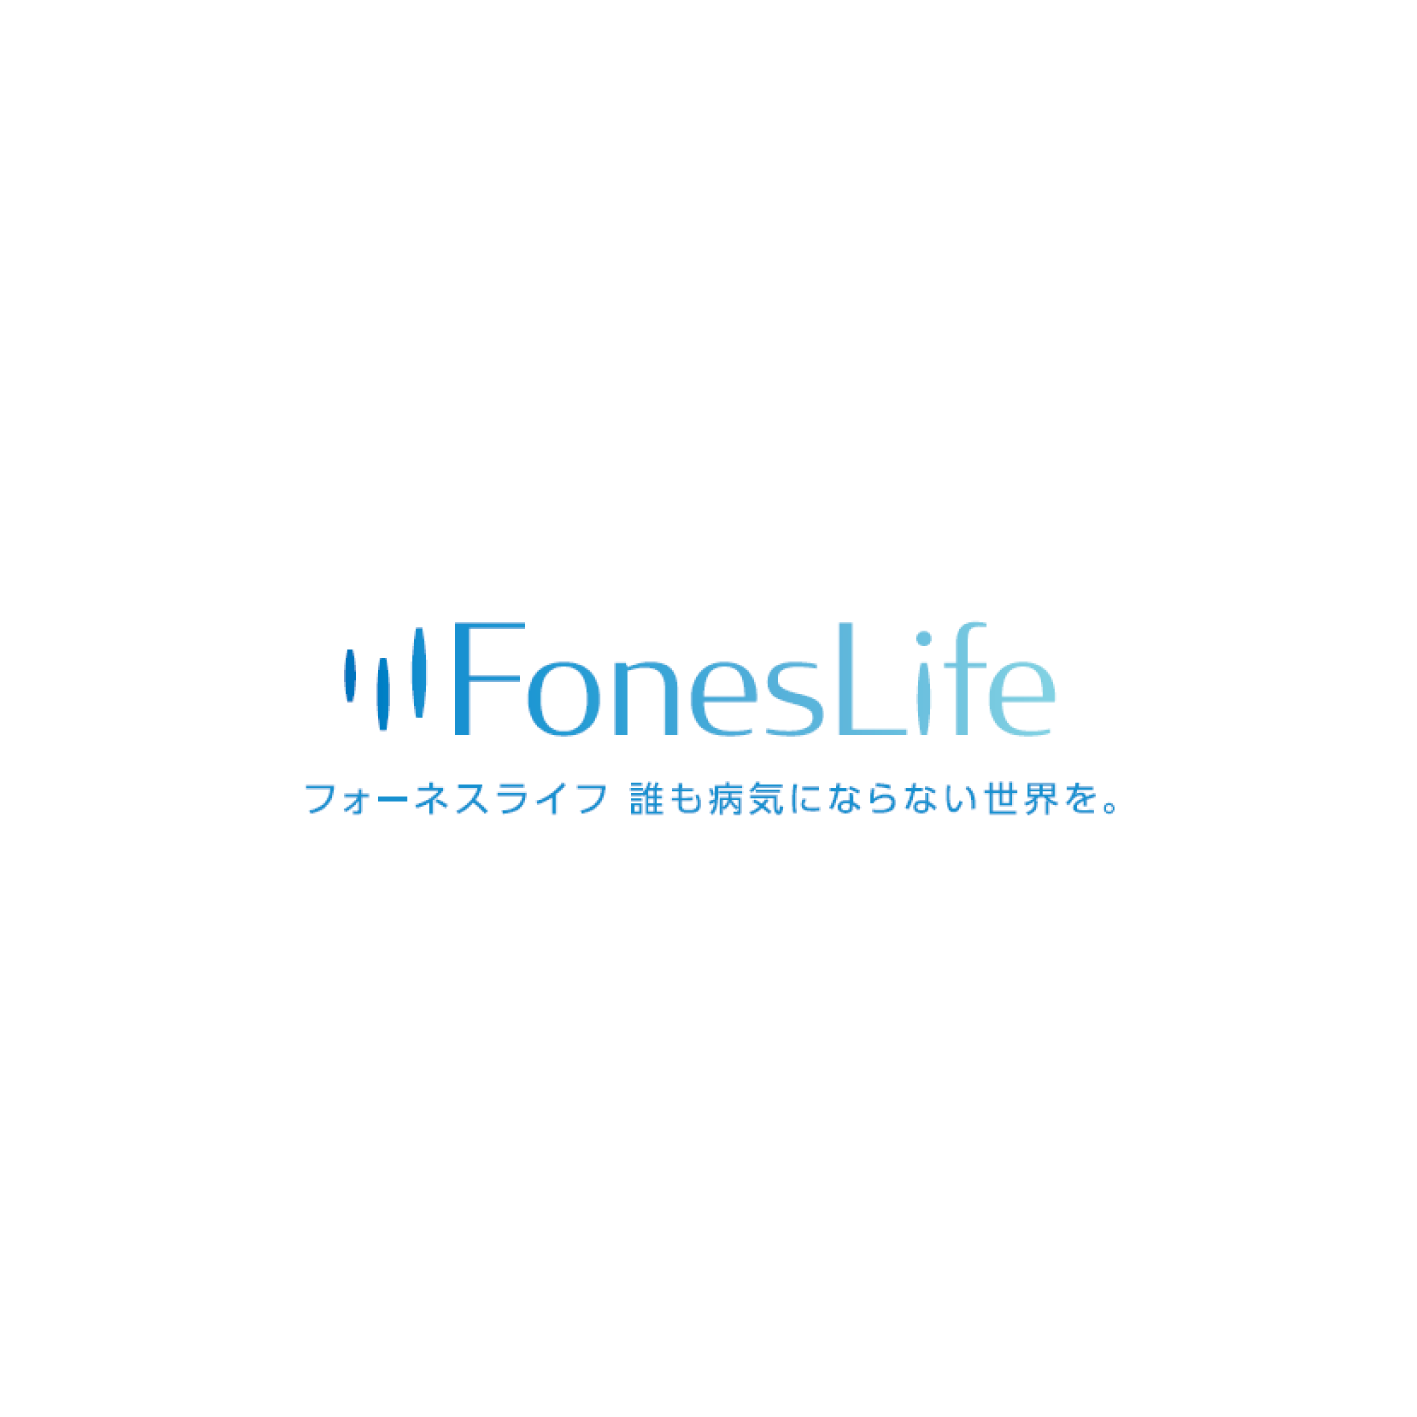 FonesLife Corporation